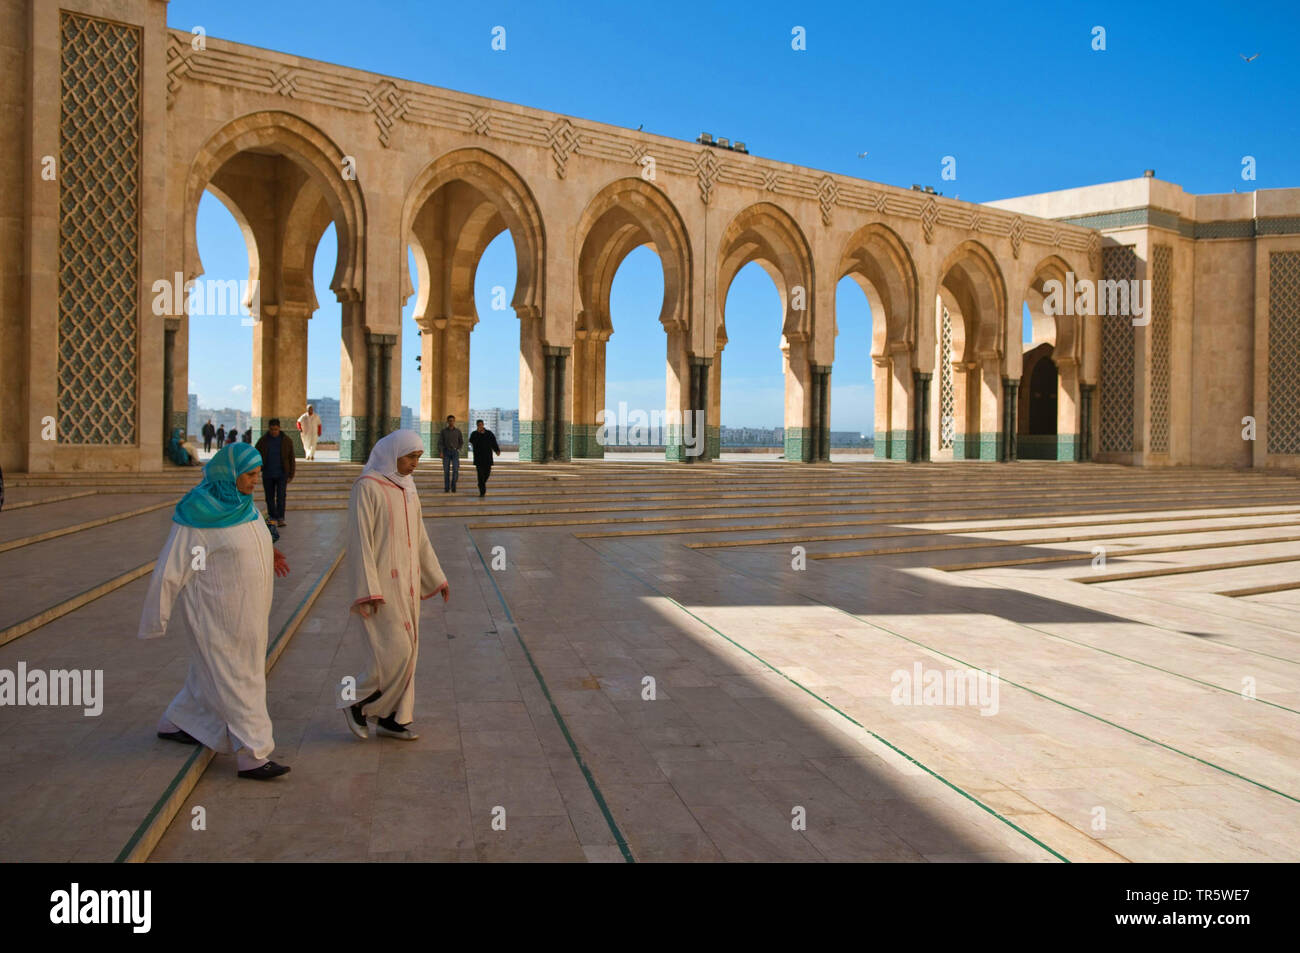 Hassan II mosque, women walking to theire site, Morocco, Casablanca Stock Photo